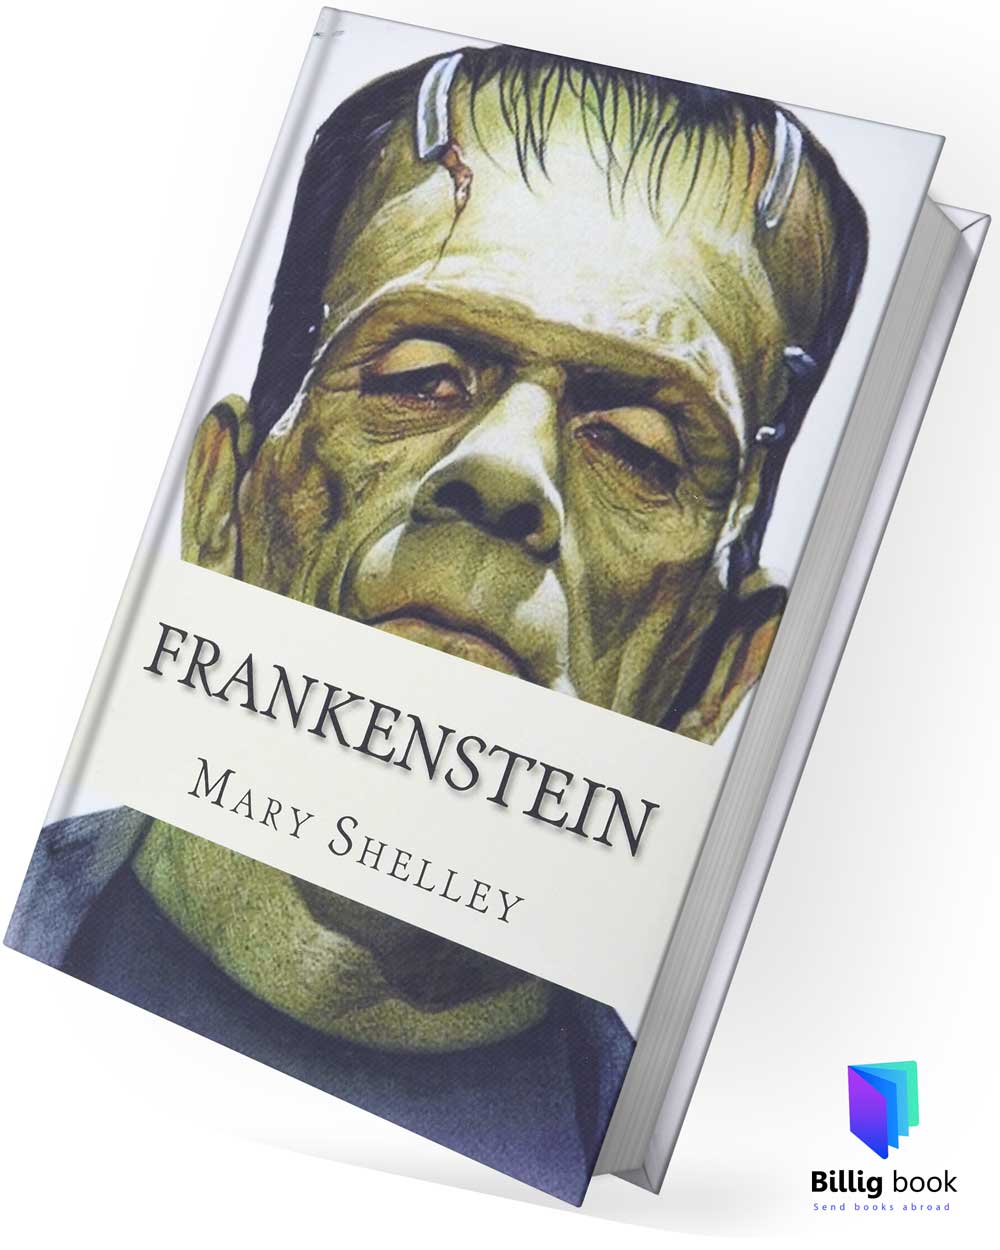 کتاب Frankenstein